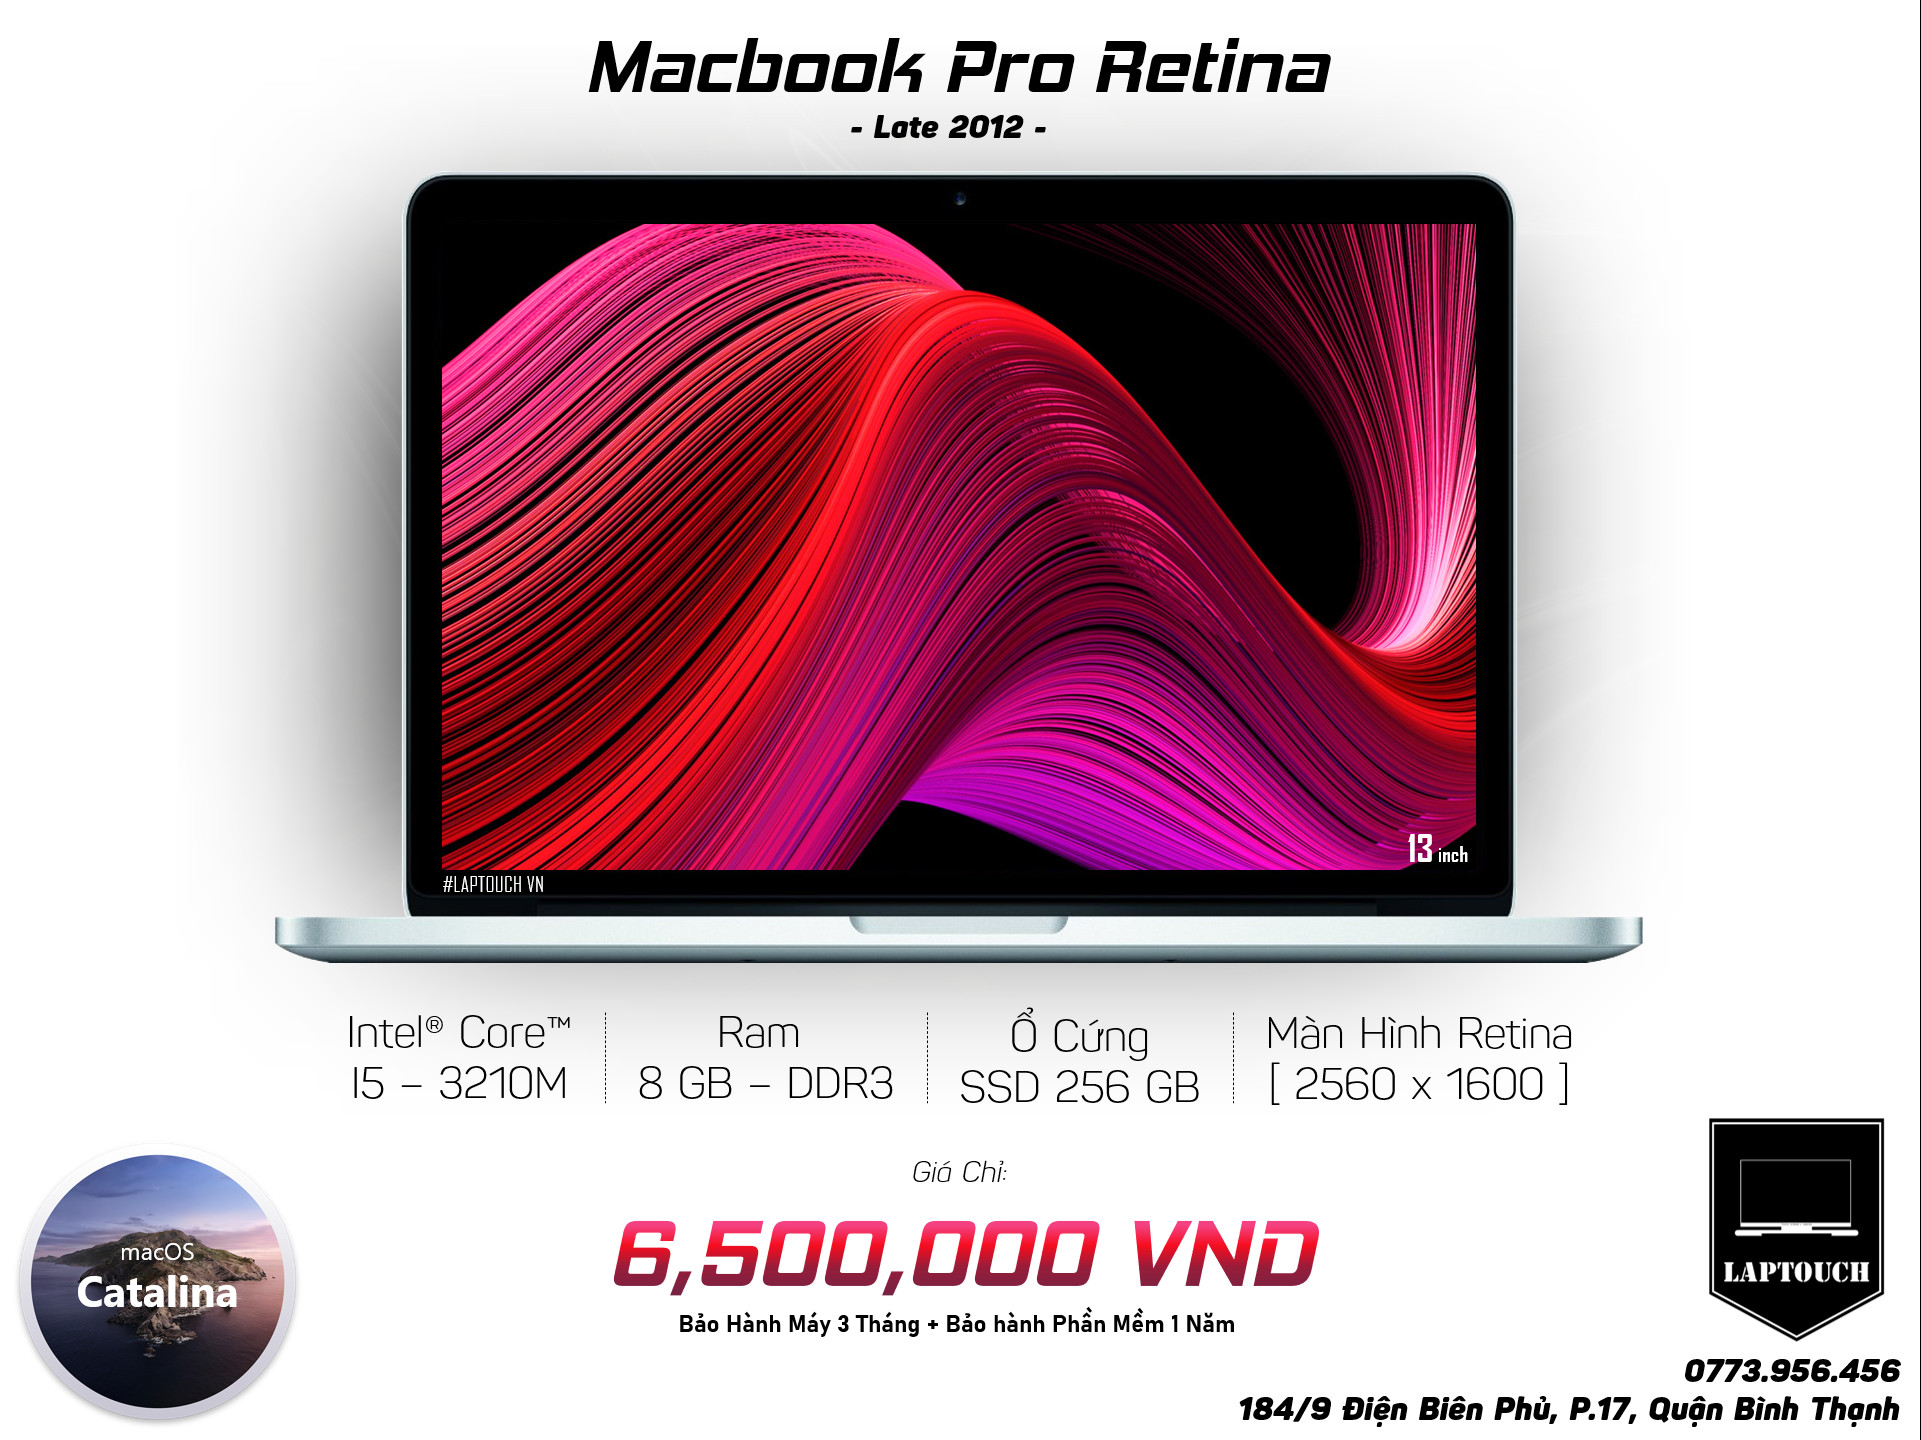 Macbook Pro Retina 13 - Late 2012